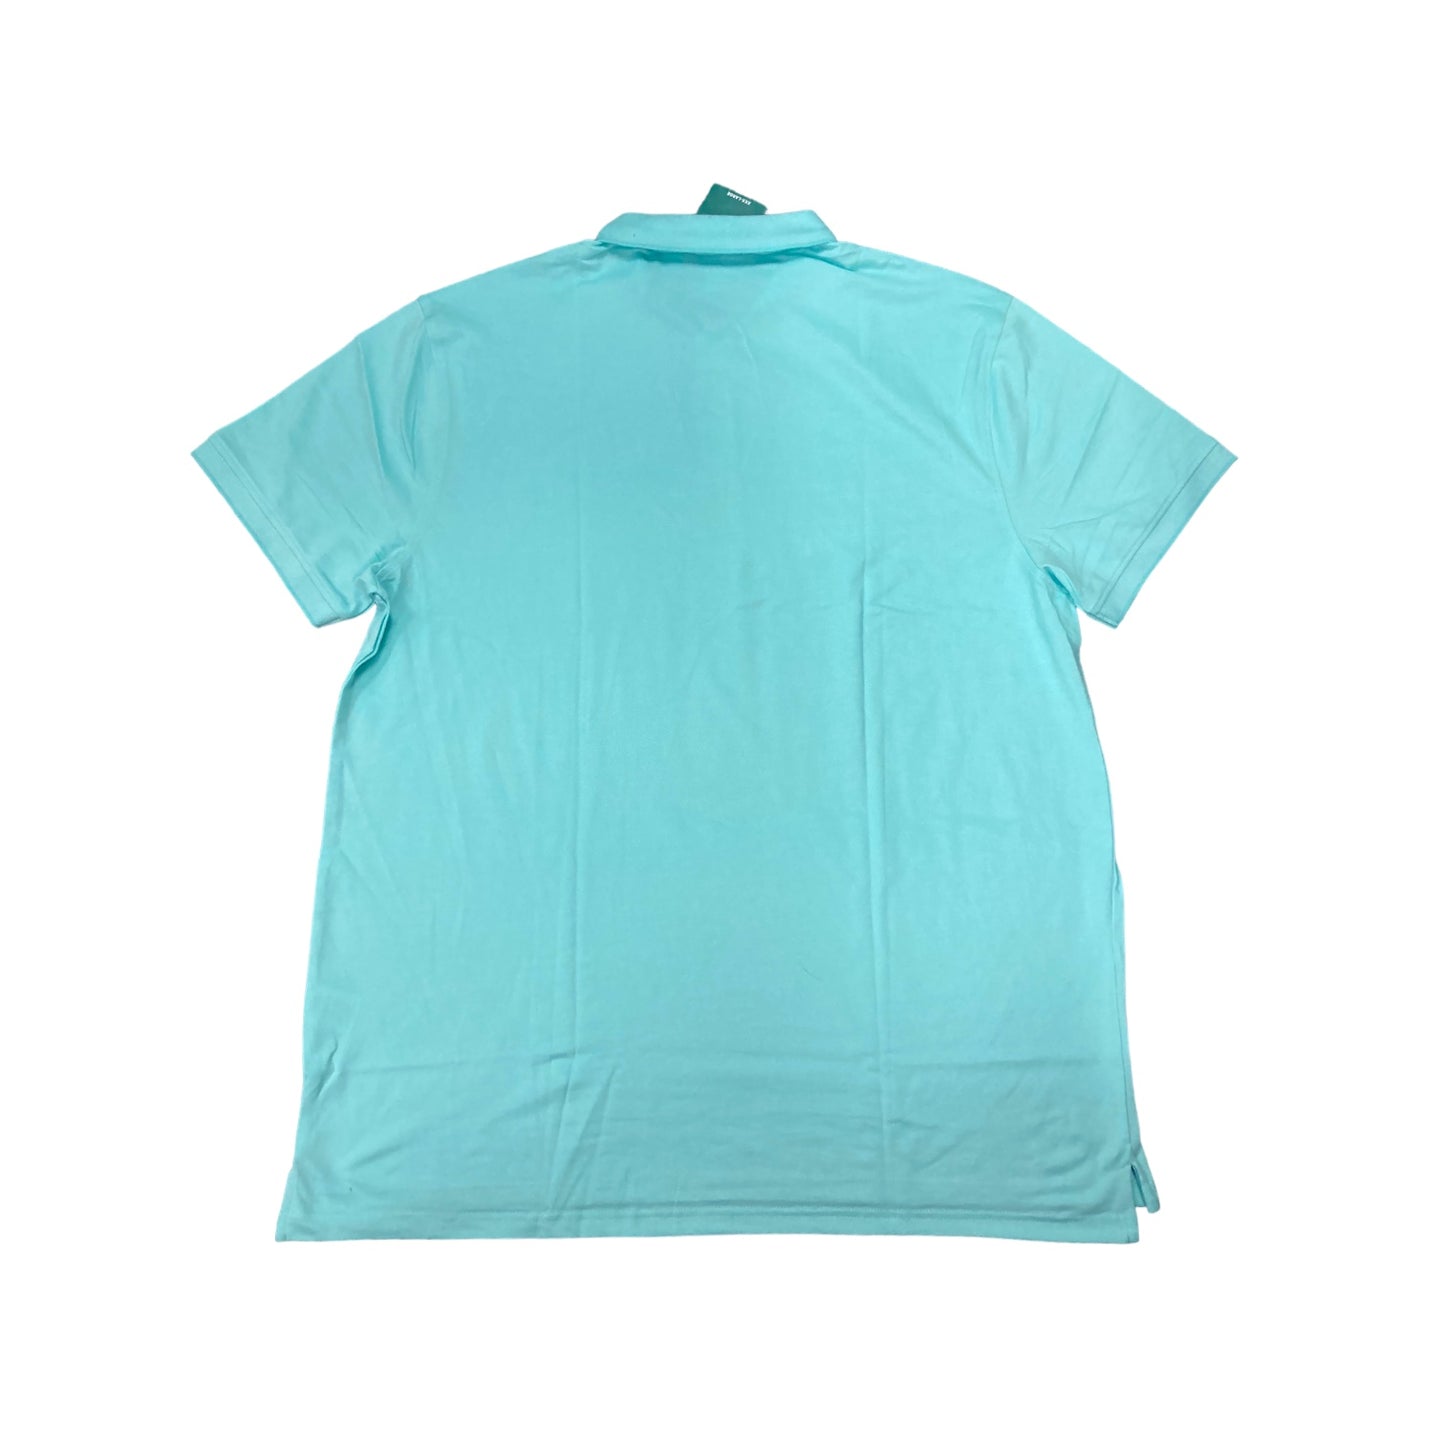 Member's Mark Men's Short Sleeve Stretch Cotton Pique Polo Shirt